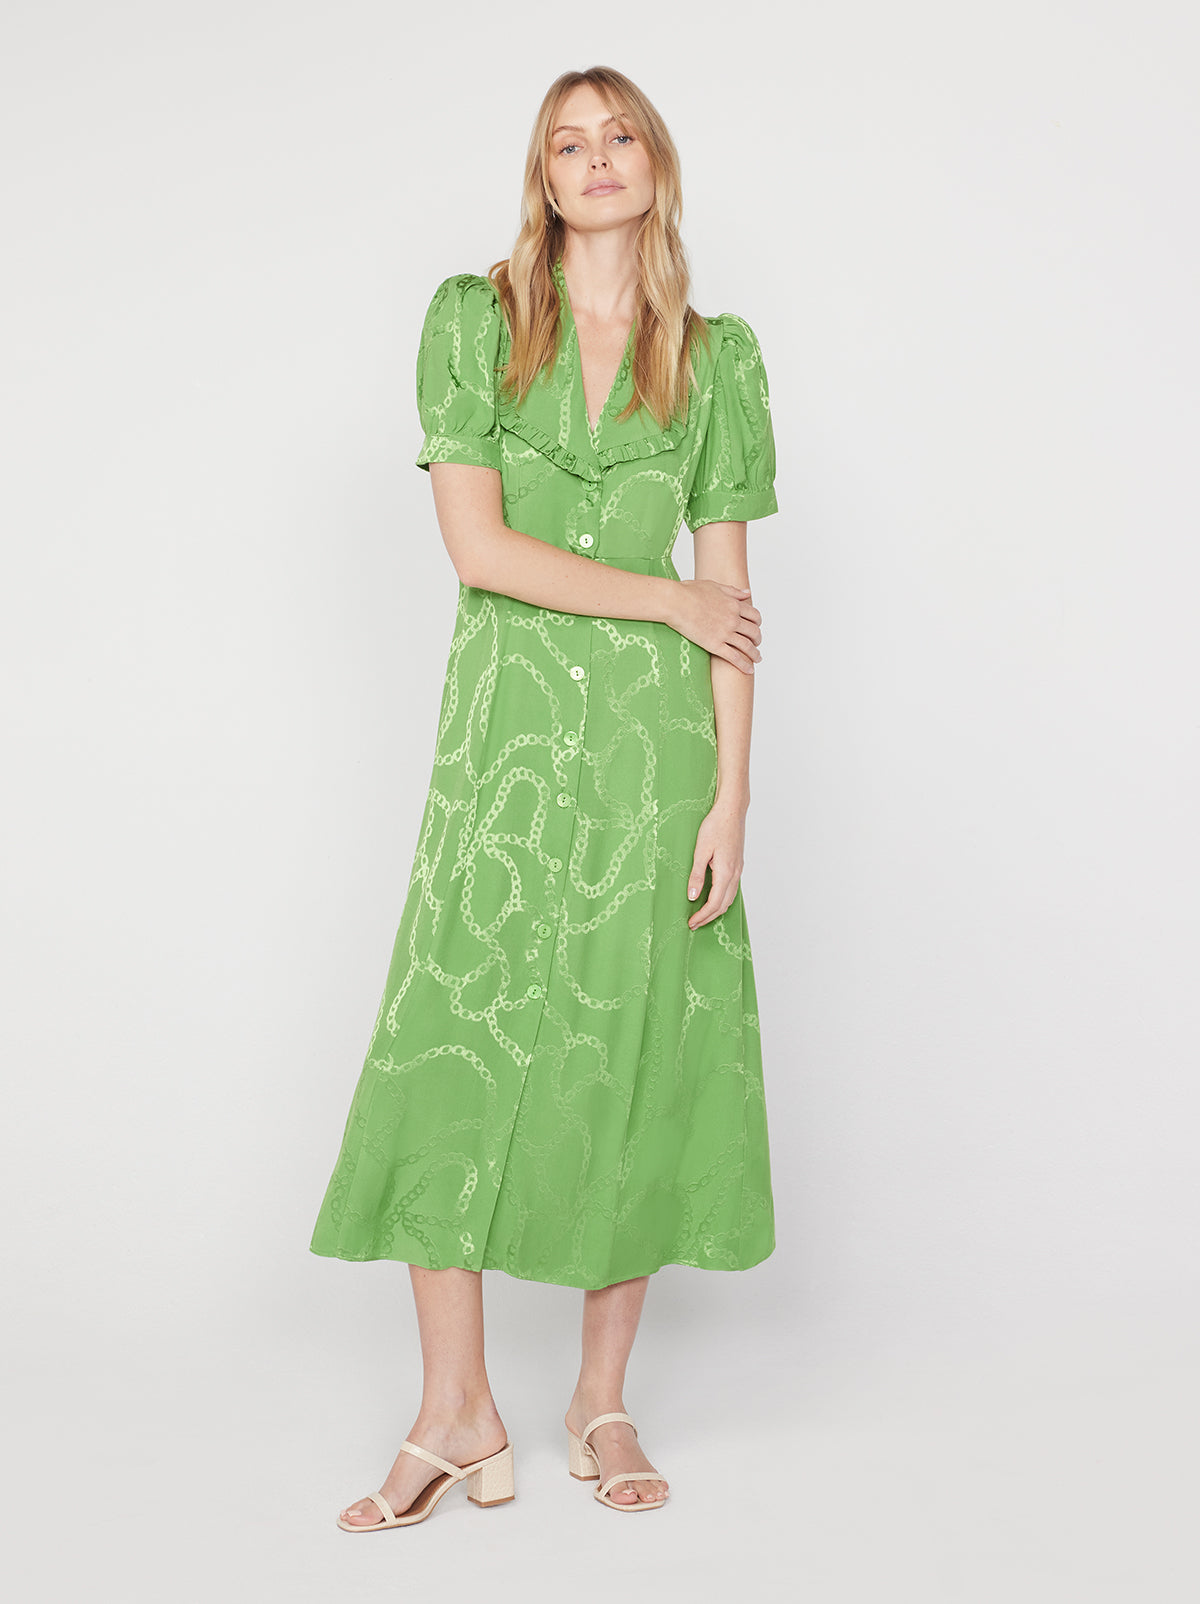 Bethany Green Chain Jacquard Tea Dress